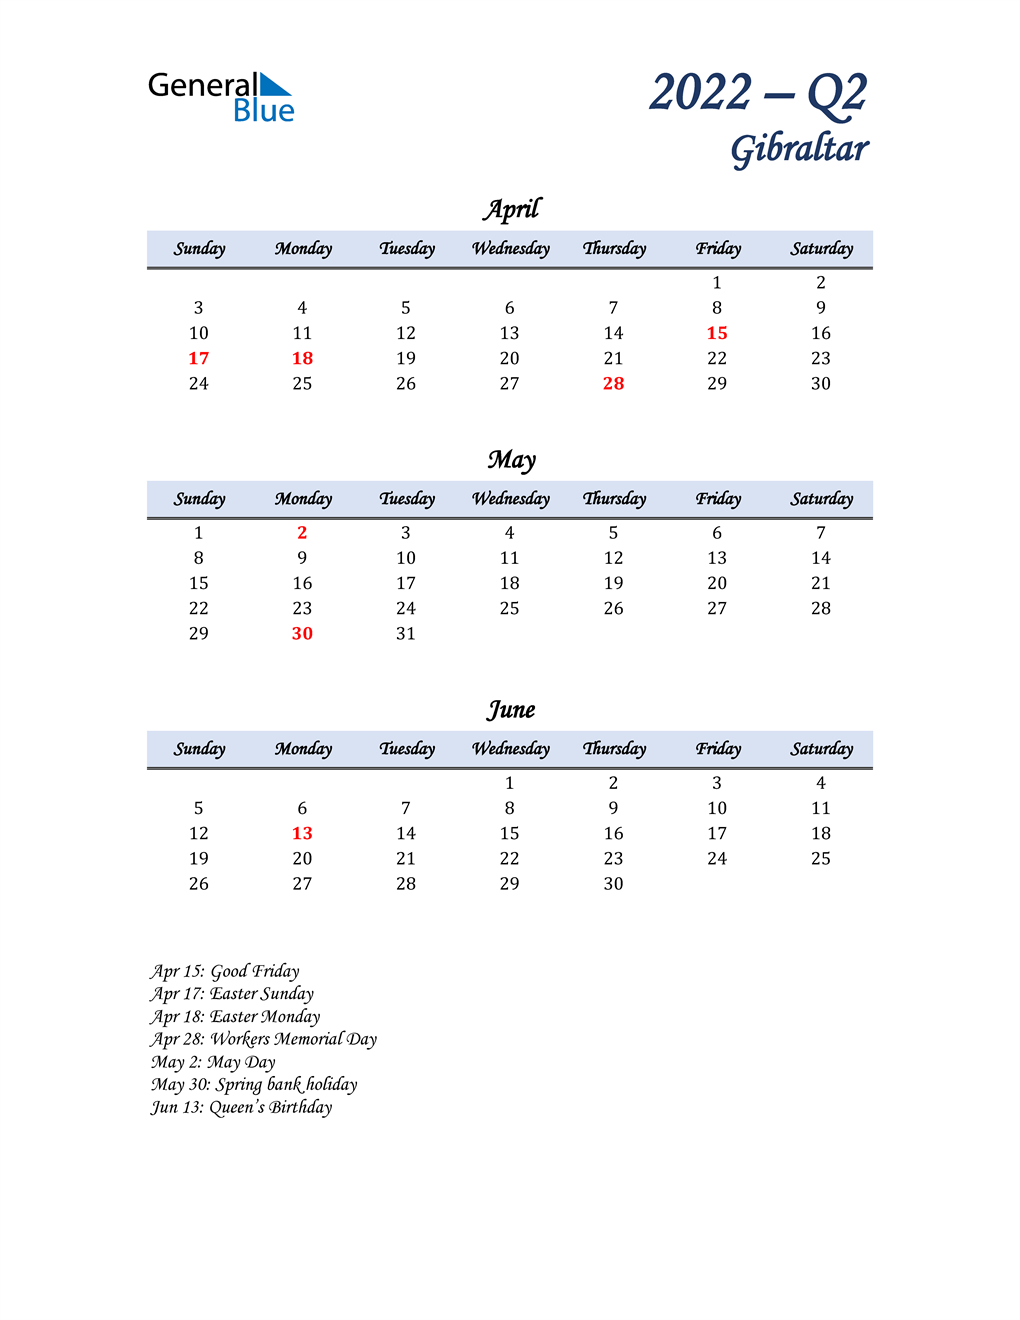  April, May, and June Calendar for Gibraltar